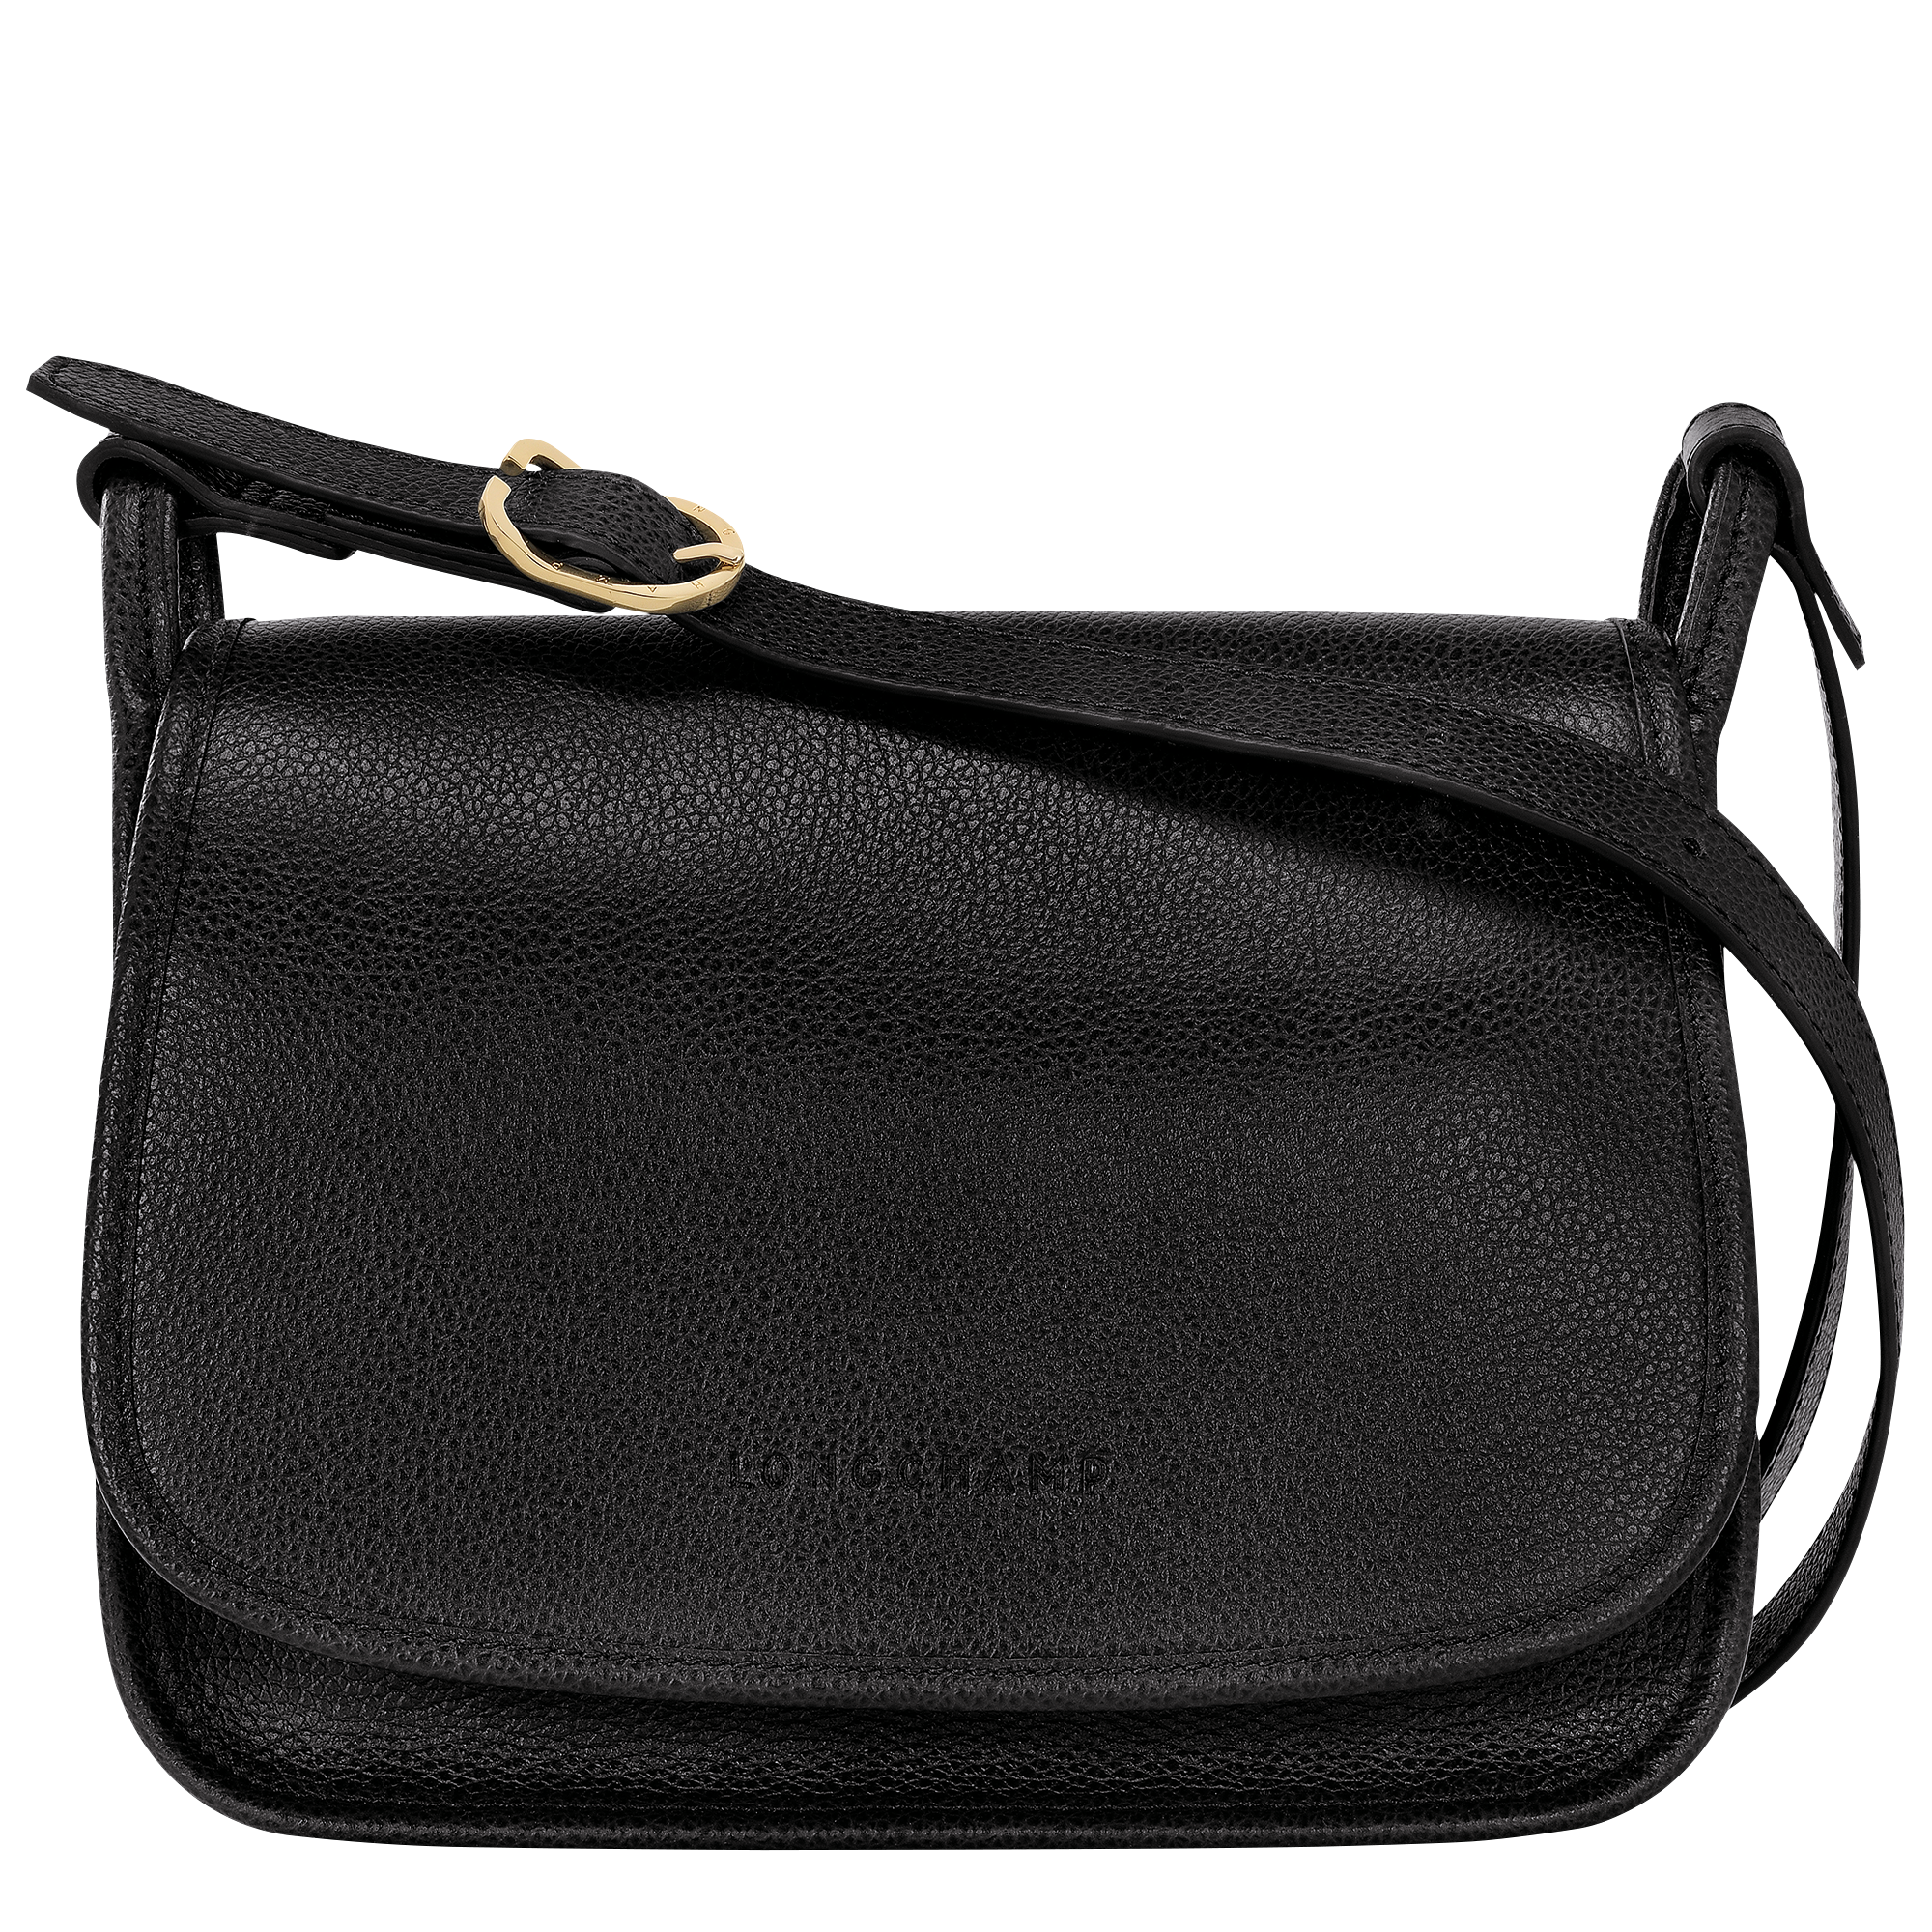 Patent leather crossbody bag